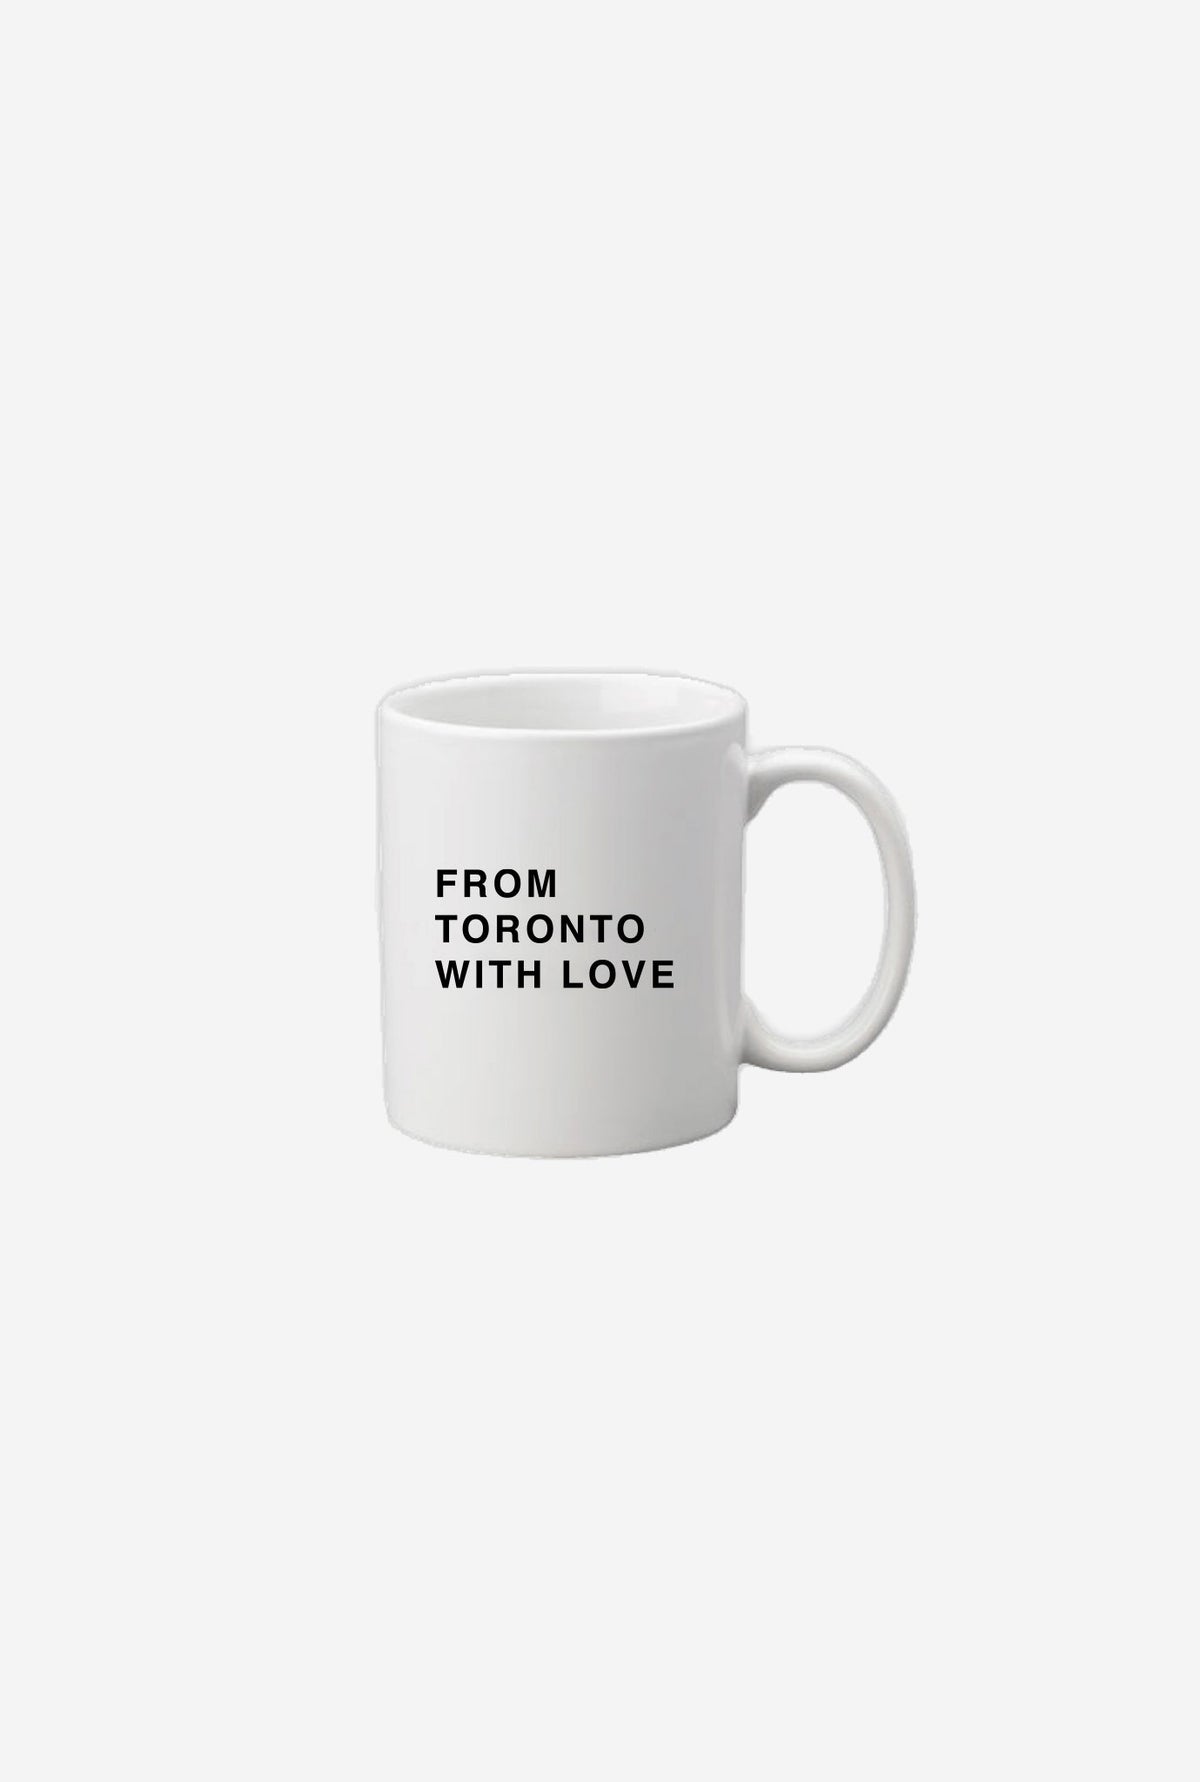 From Toronto with Love Mug - White